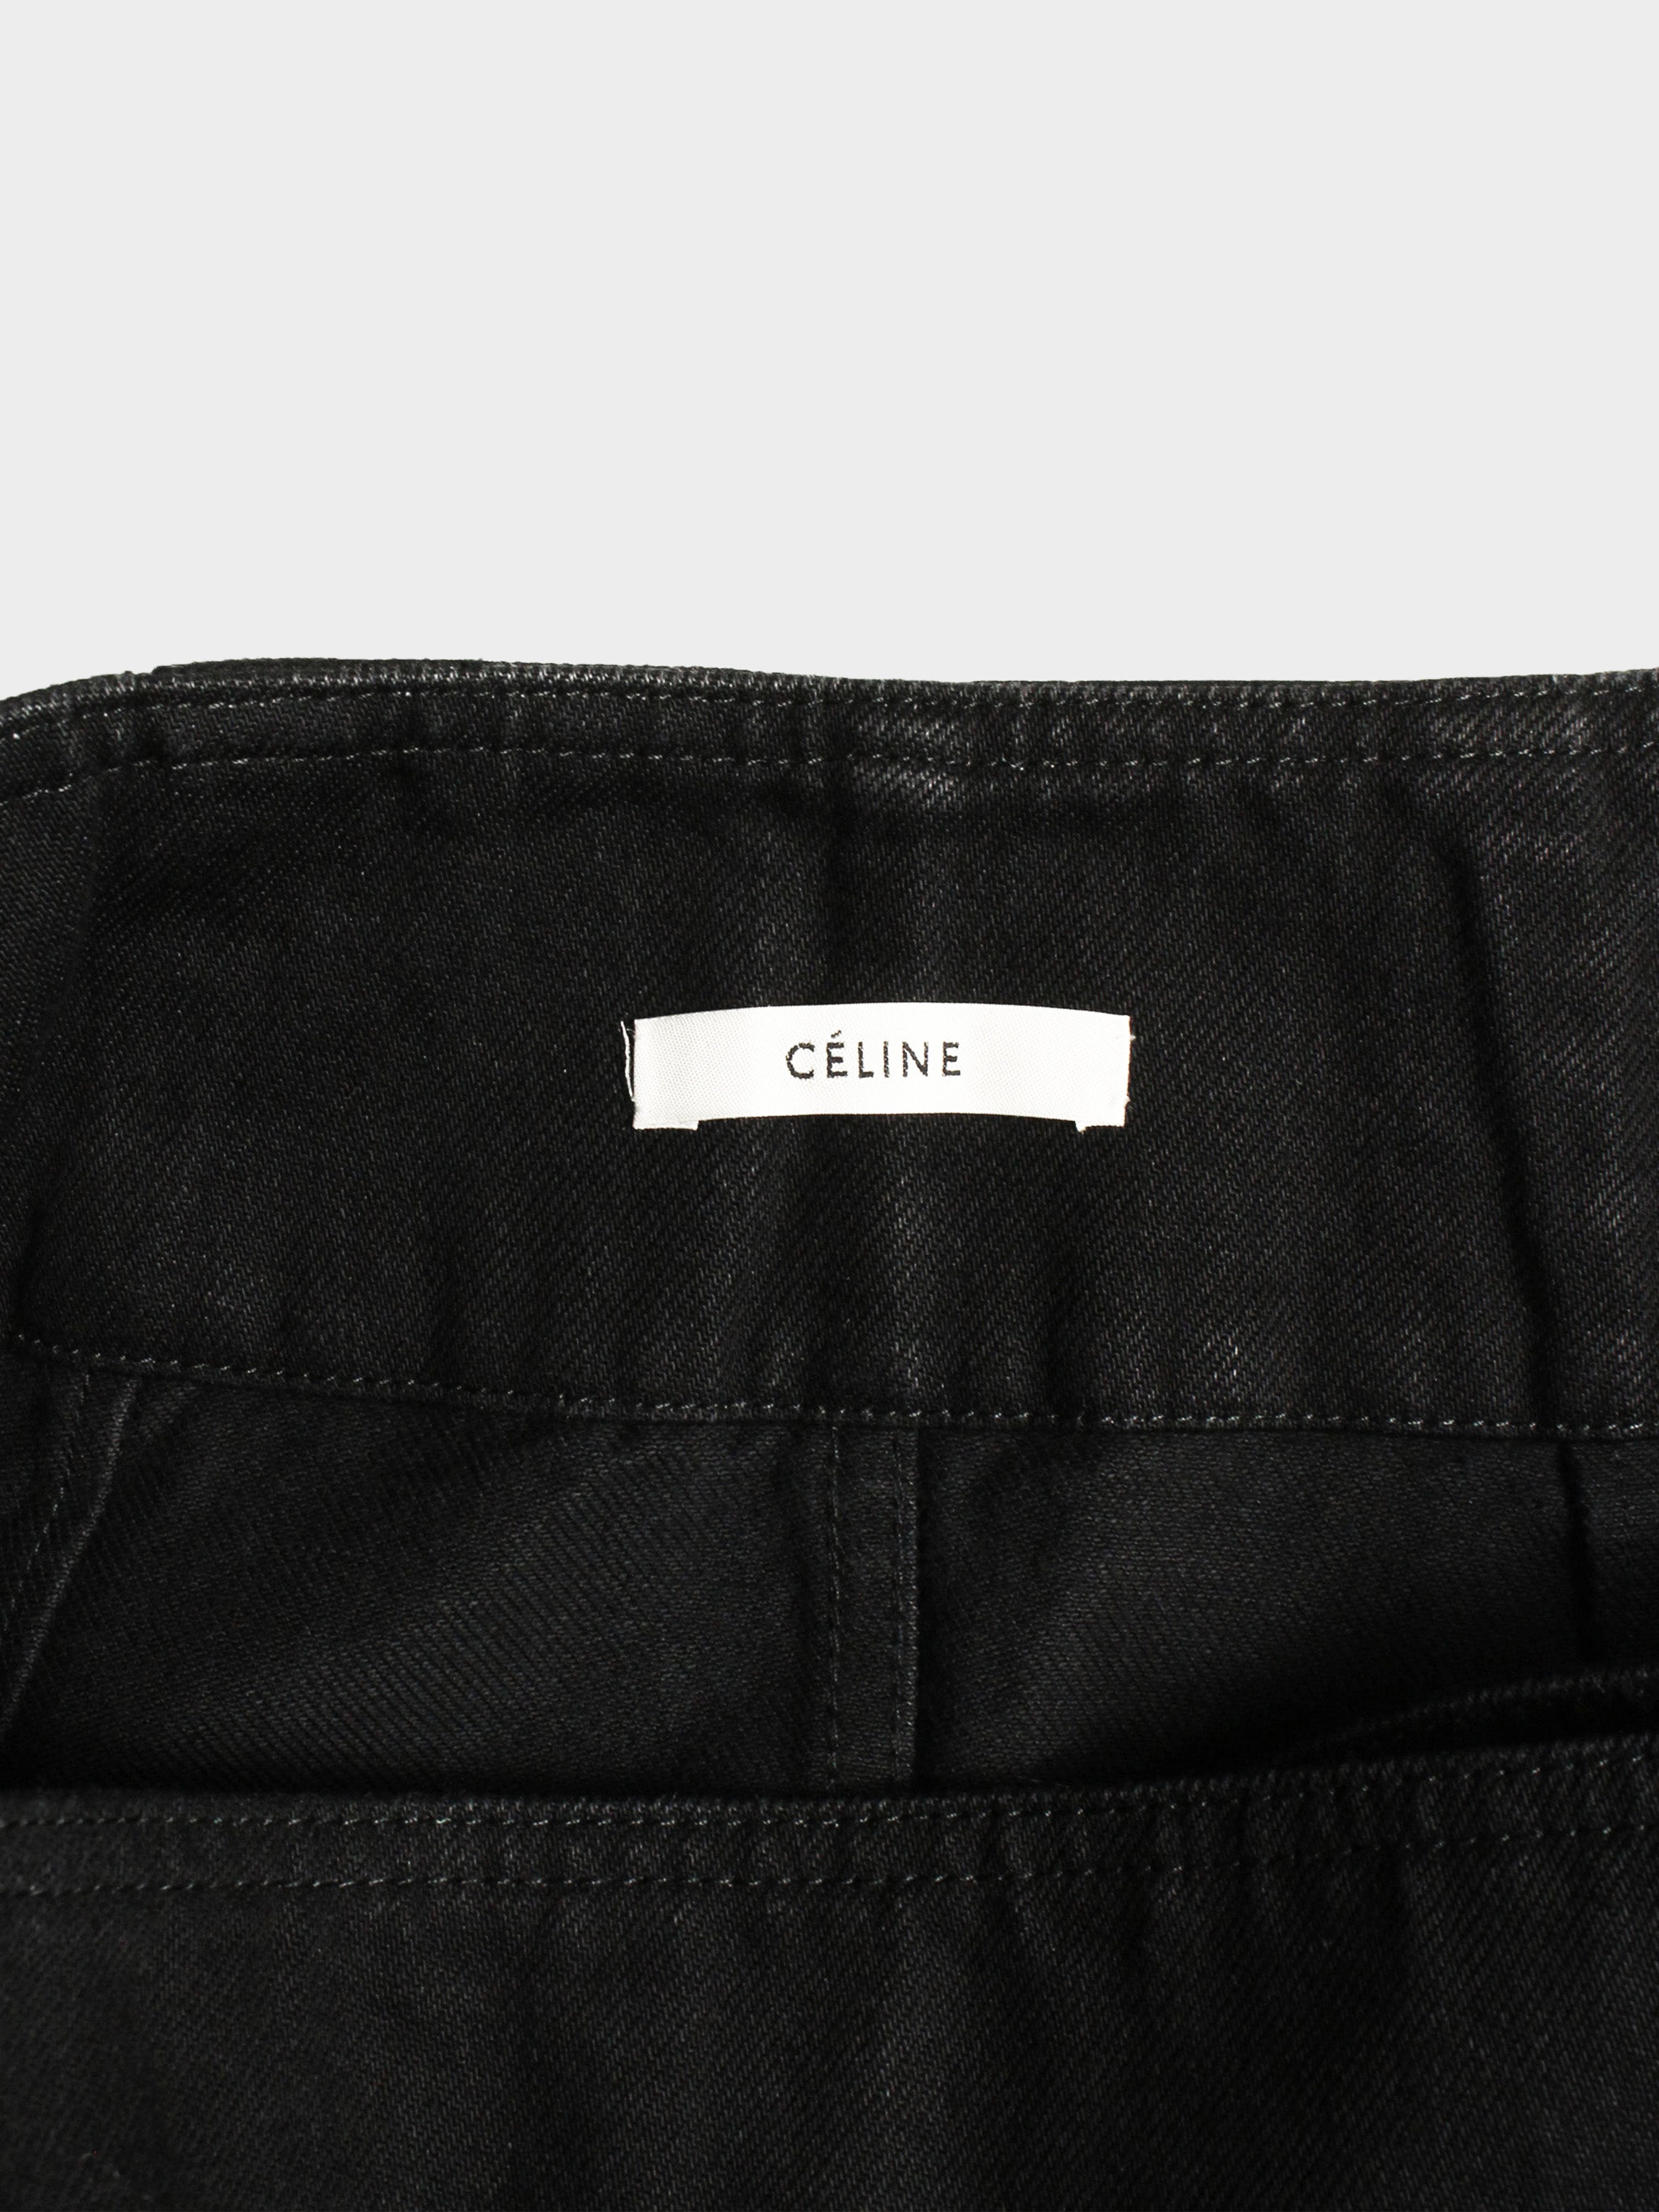 Céline by Phoebe Philo 2010s Knee-Length Wrap Skirt